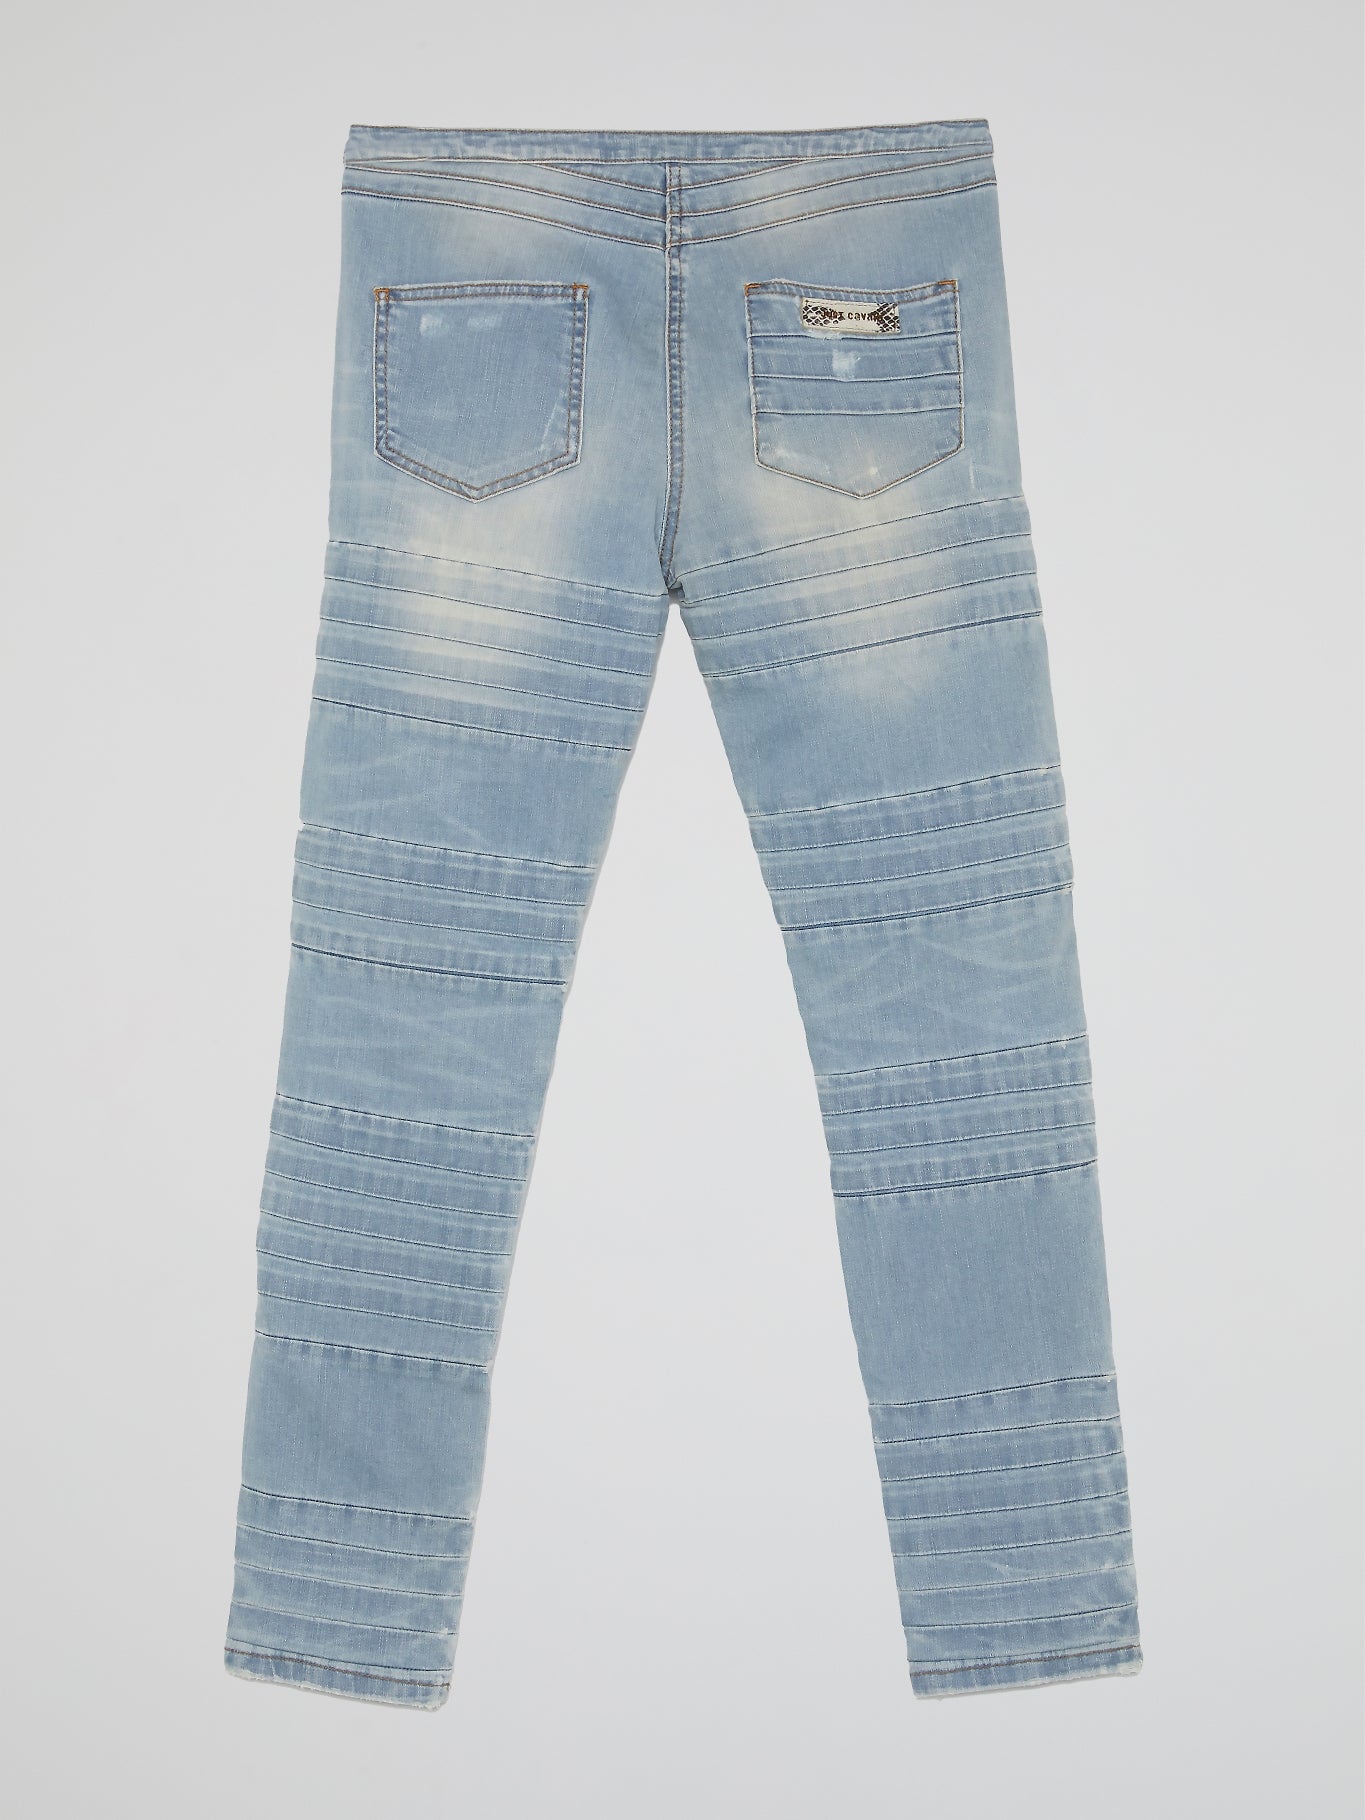 Blue Stonewash Distressed Jeans